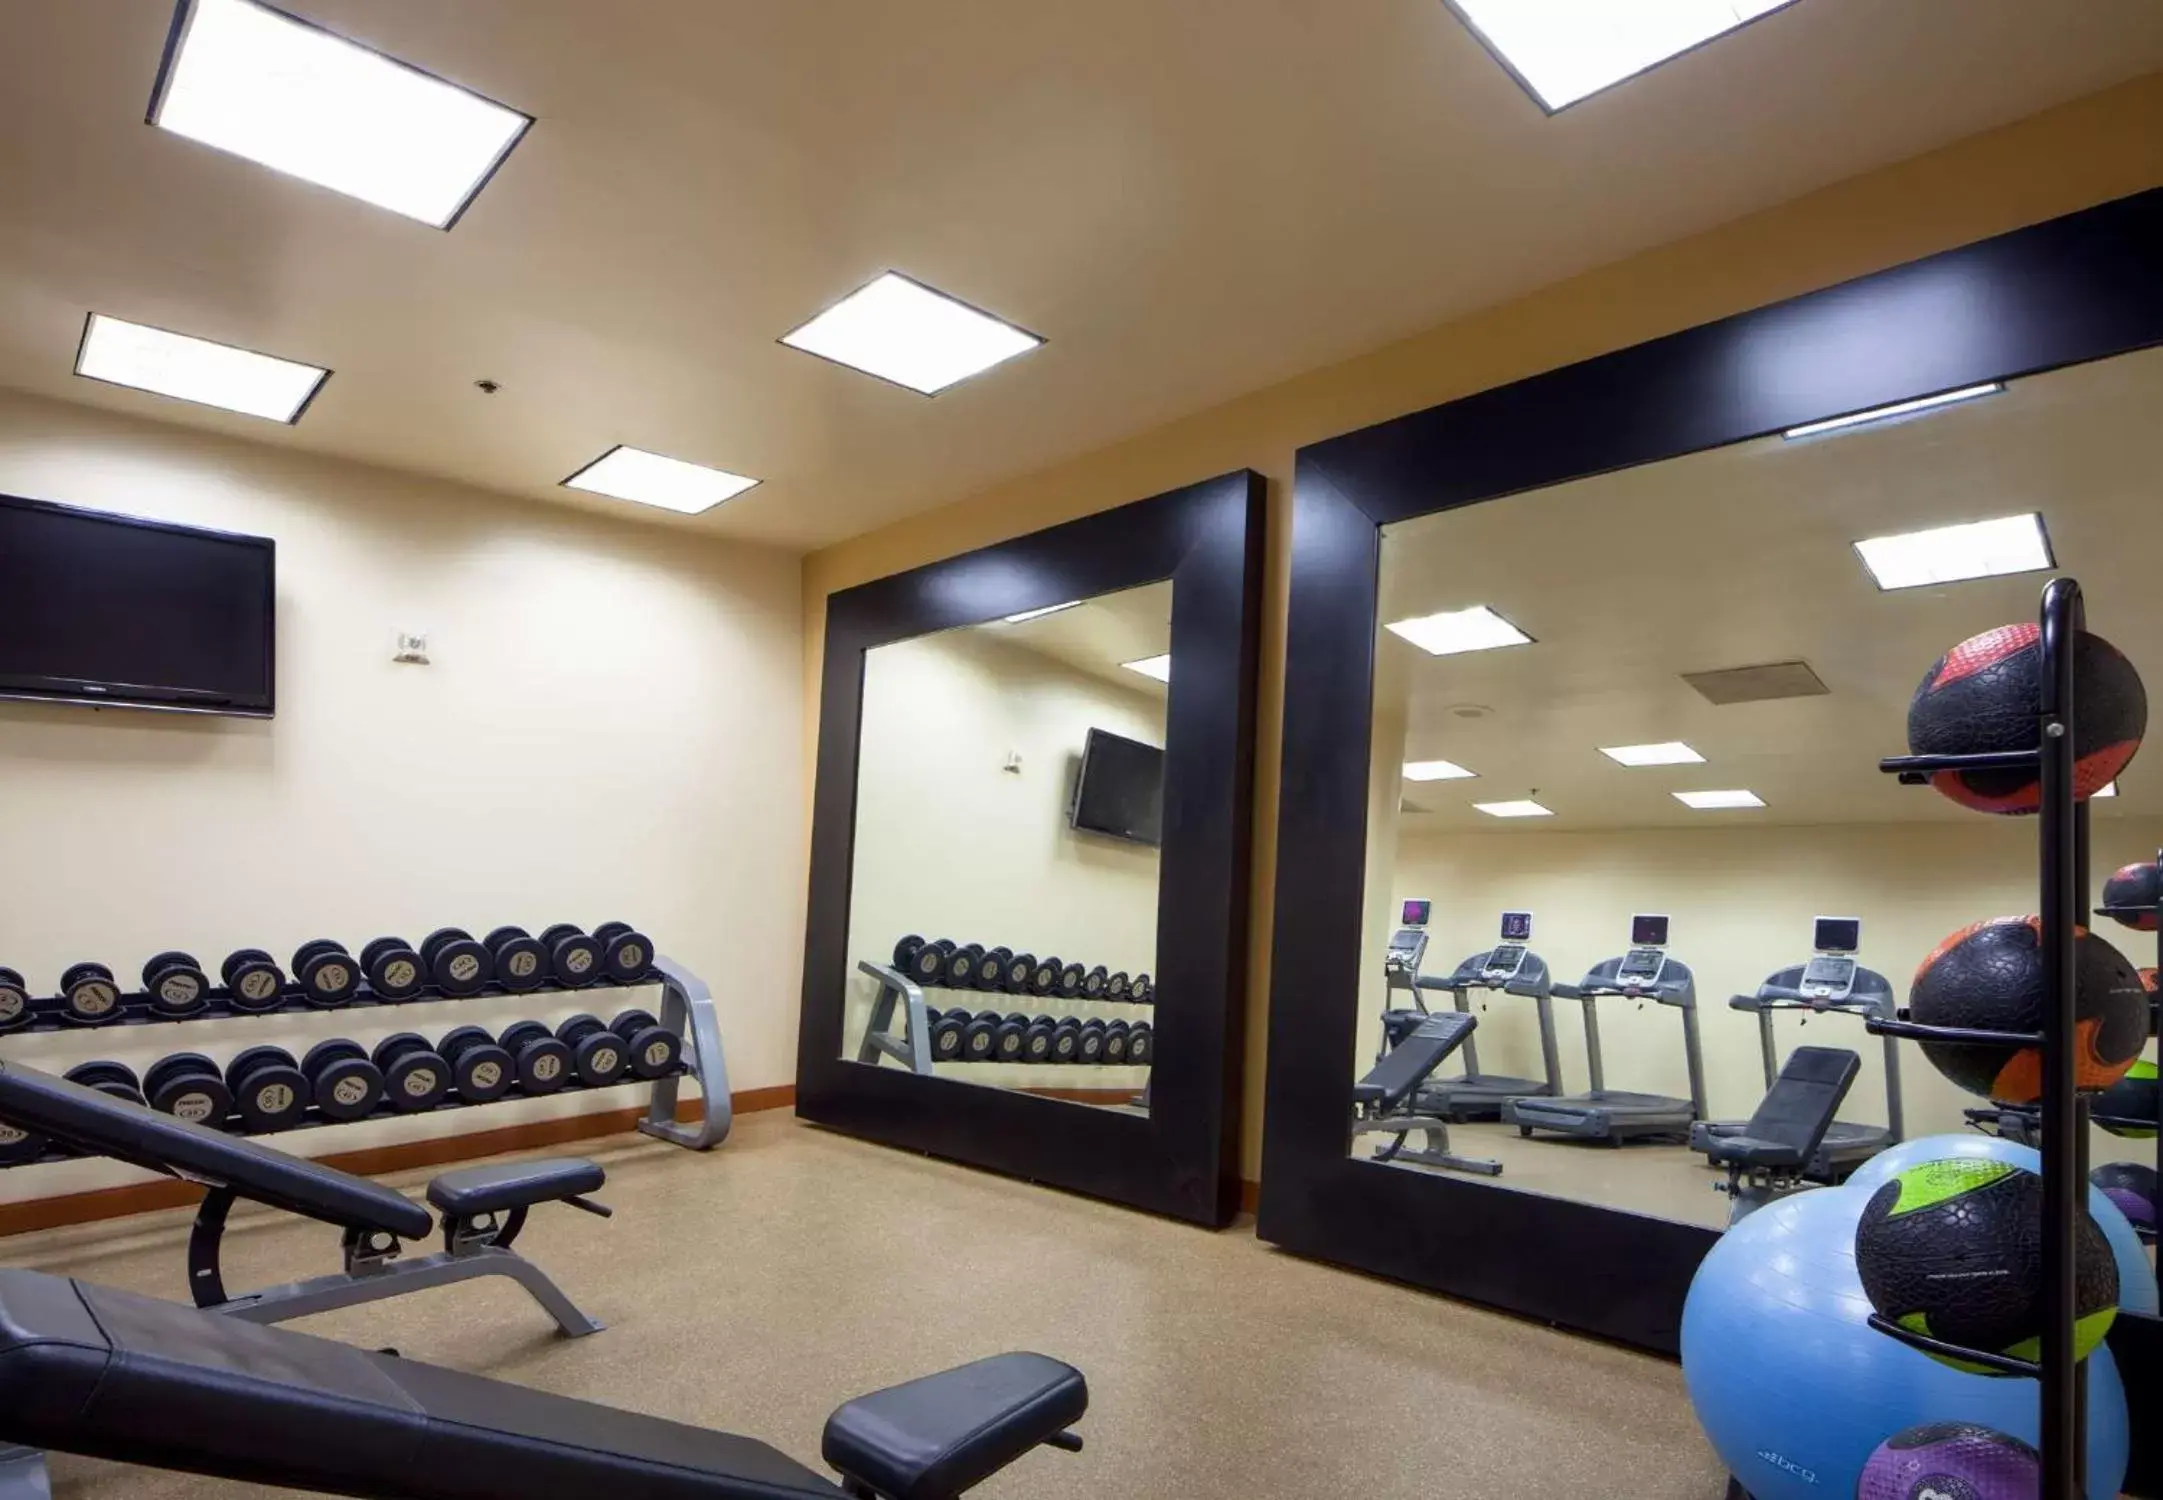 Fitness centre/facilities, Fitness Center/Facilities in Embassy Suites San Antonio Airport